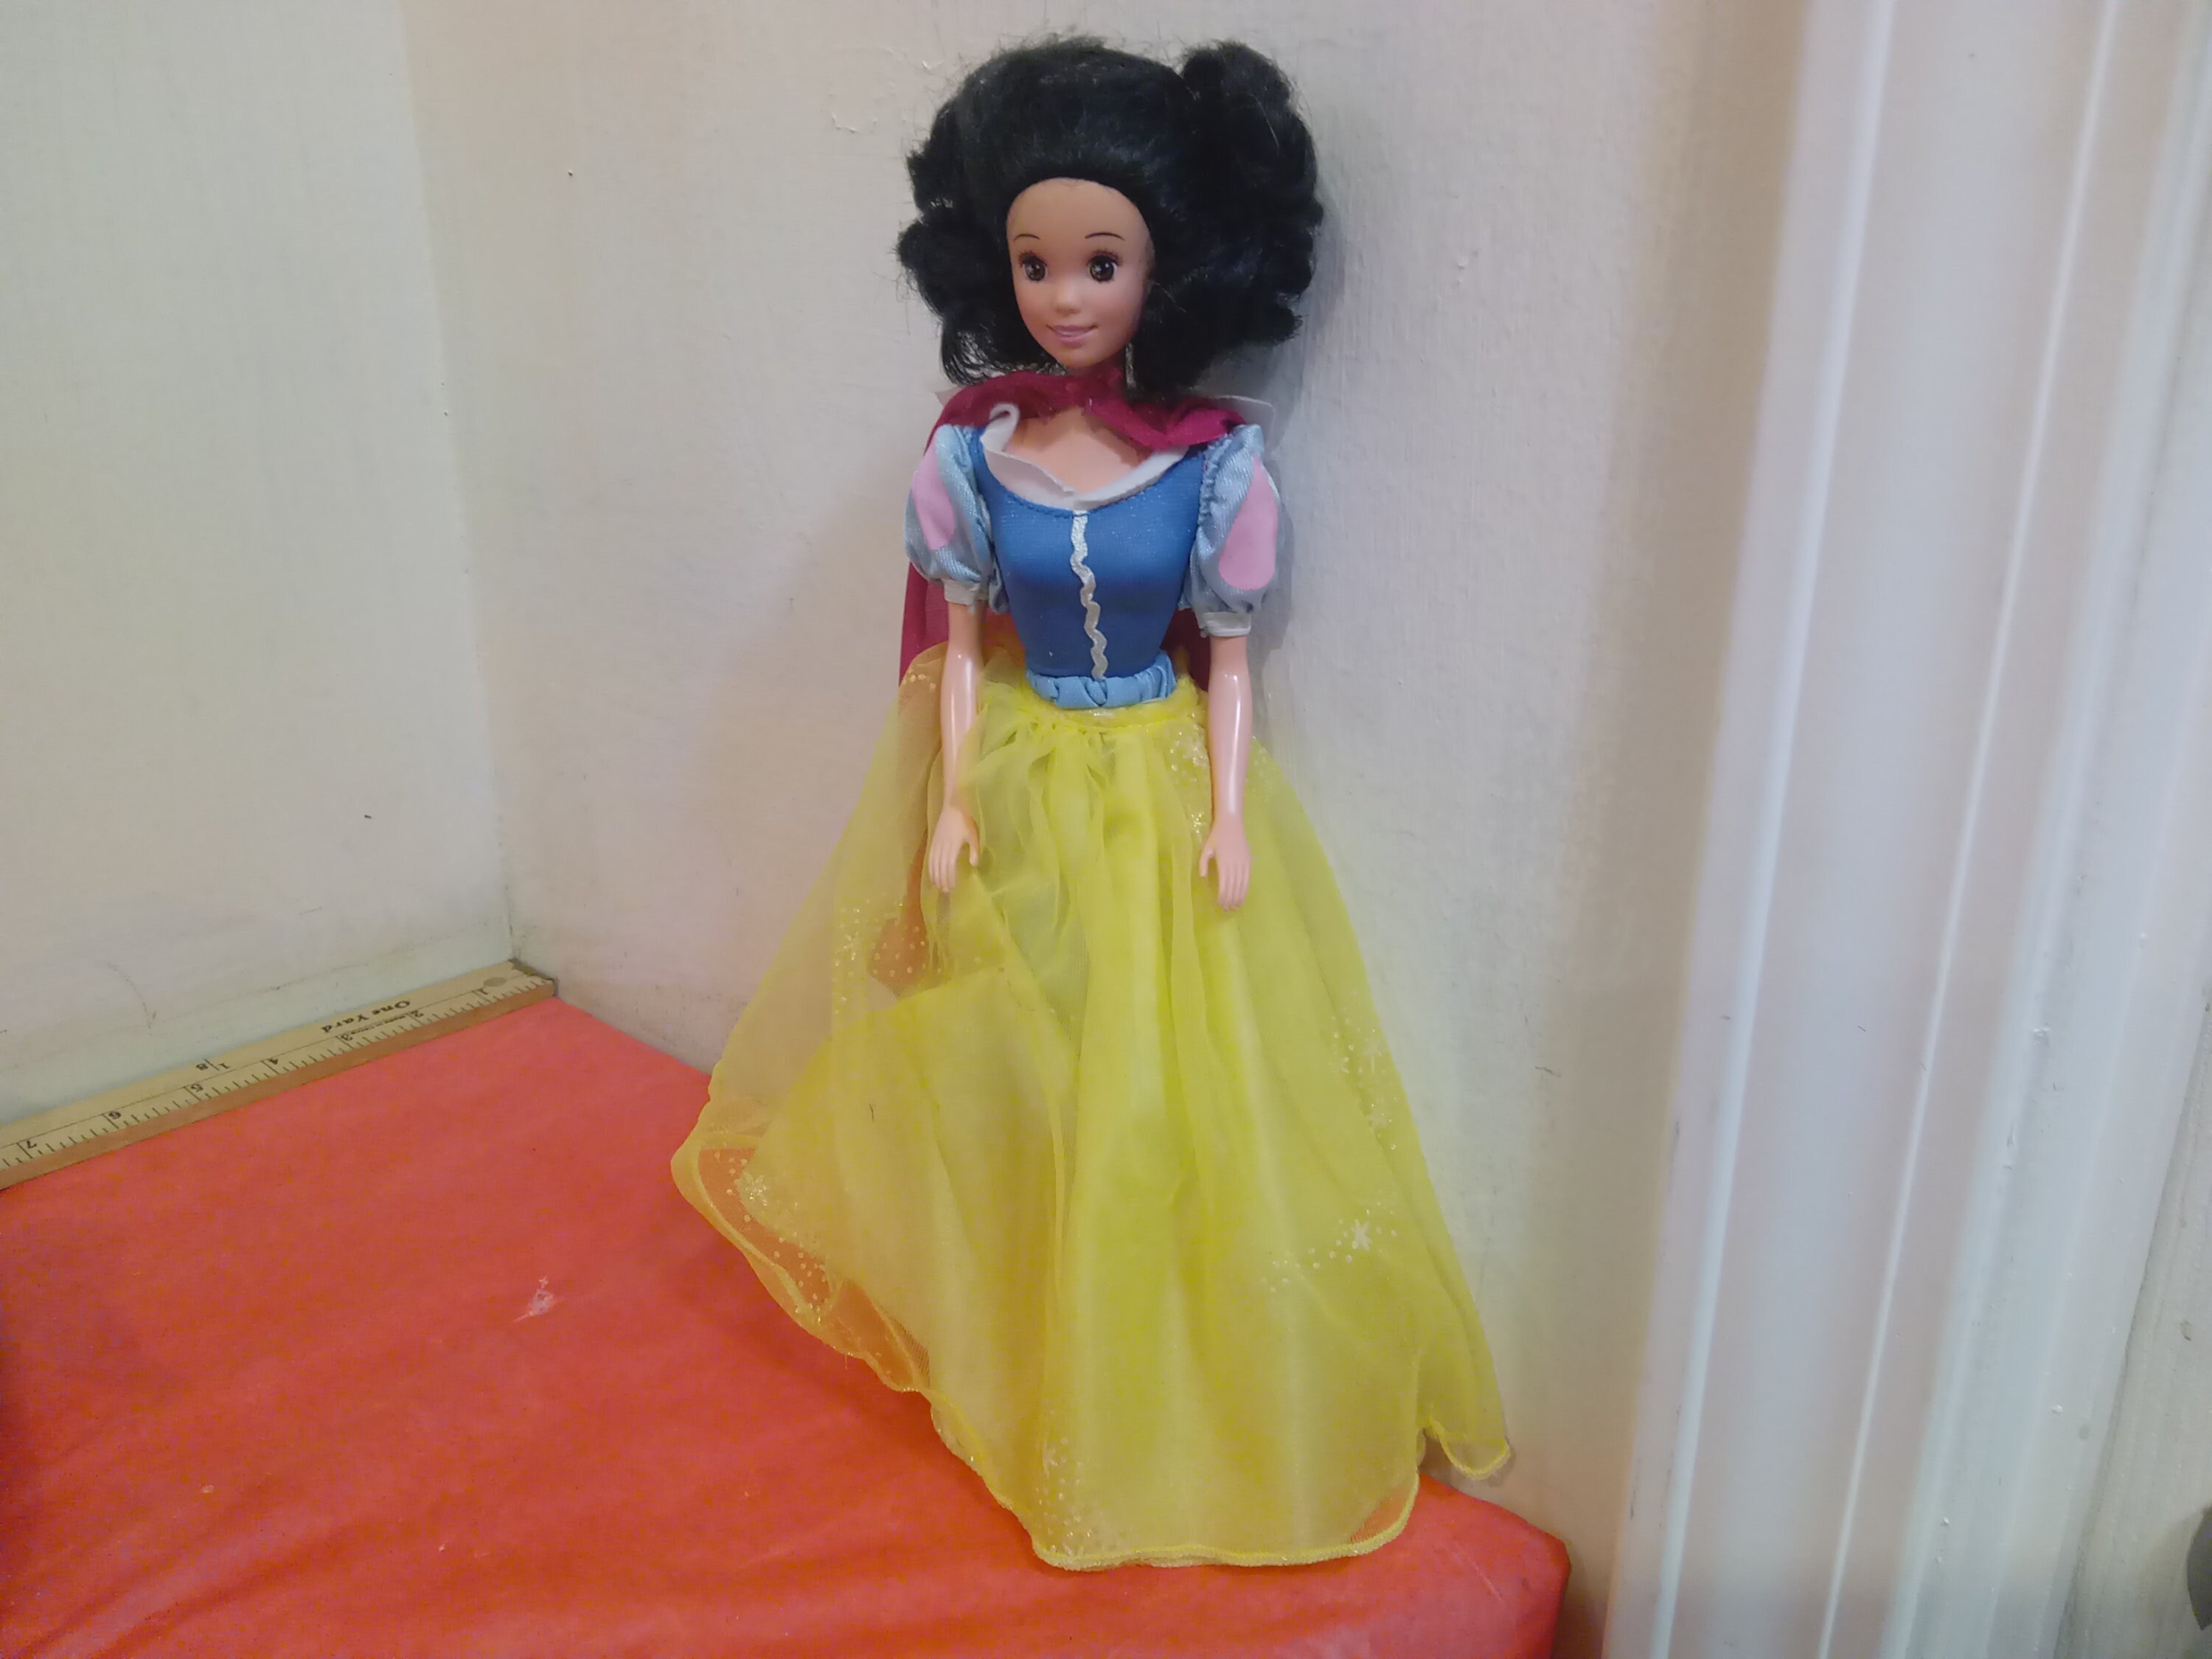 Disney Princesses Return to Mattel as Barbie Maker's Turnaround